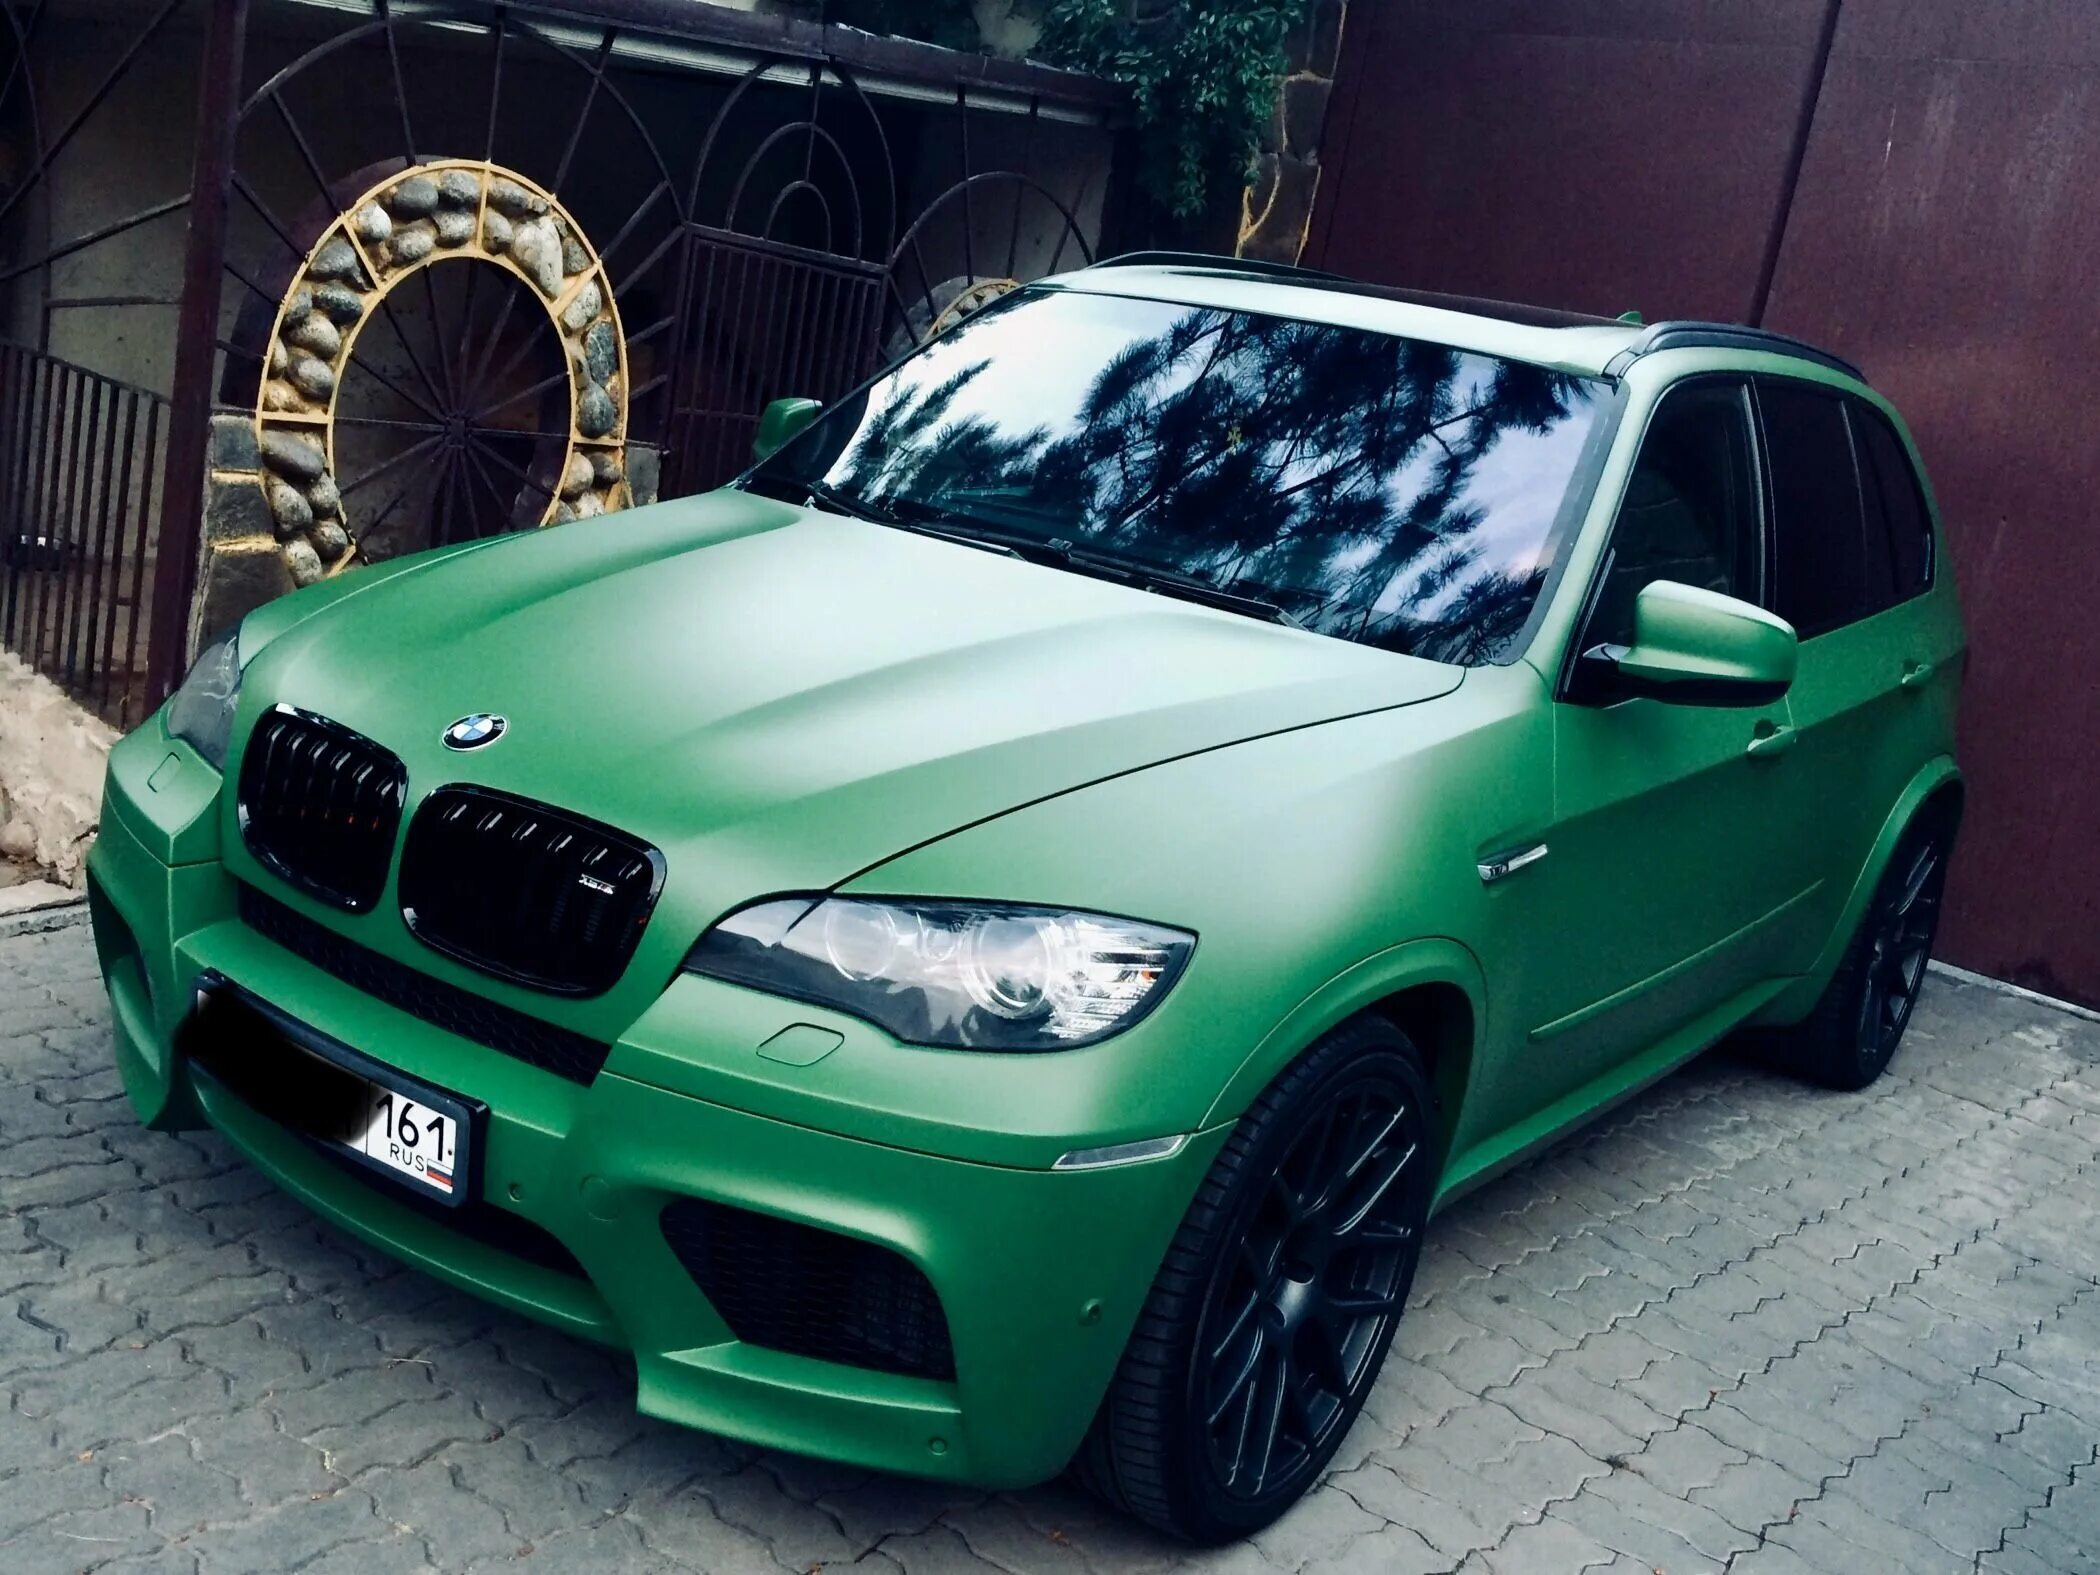 Bmw x5 цвета. BMW x5m Green. Зеленая БМВ x5. BMW x5 e70 Green. BMW x5m хаки.